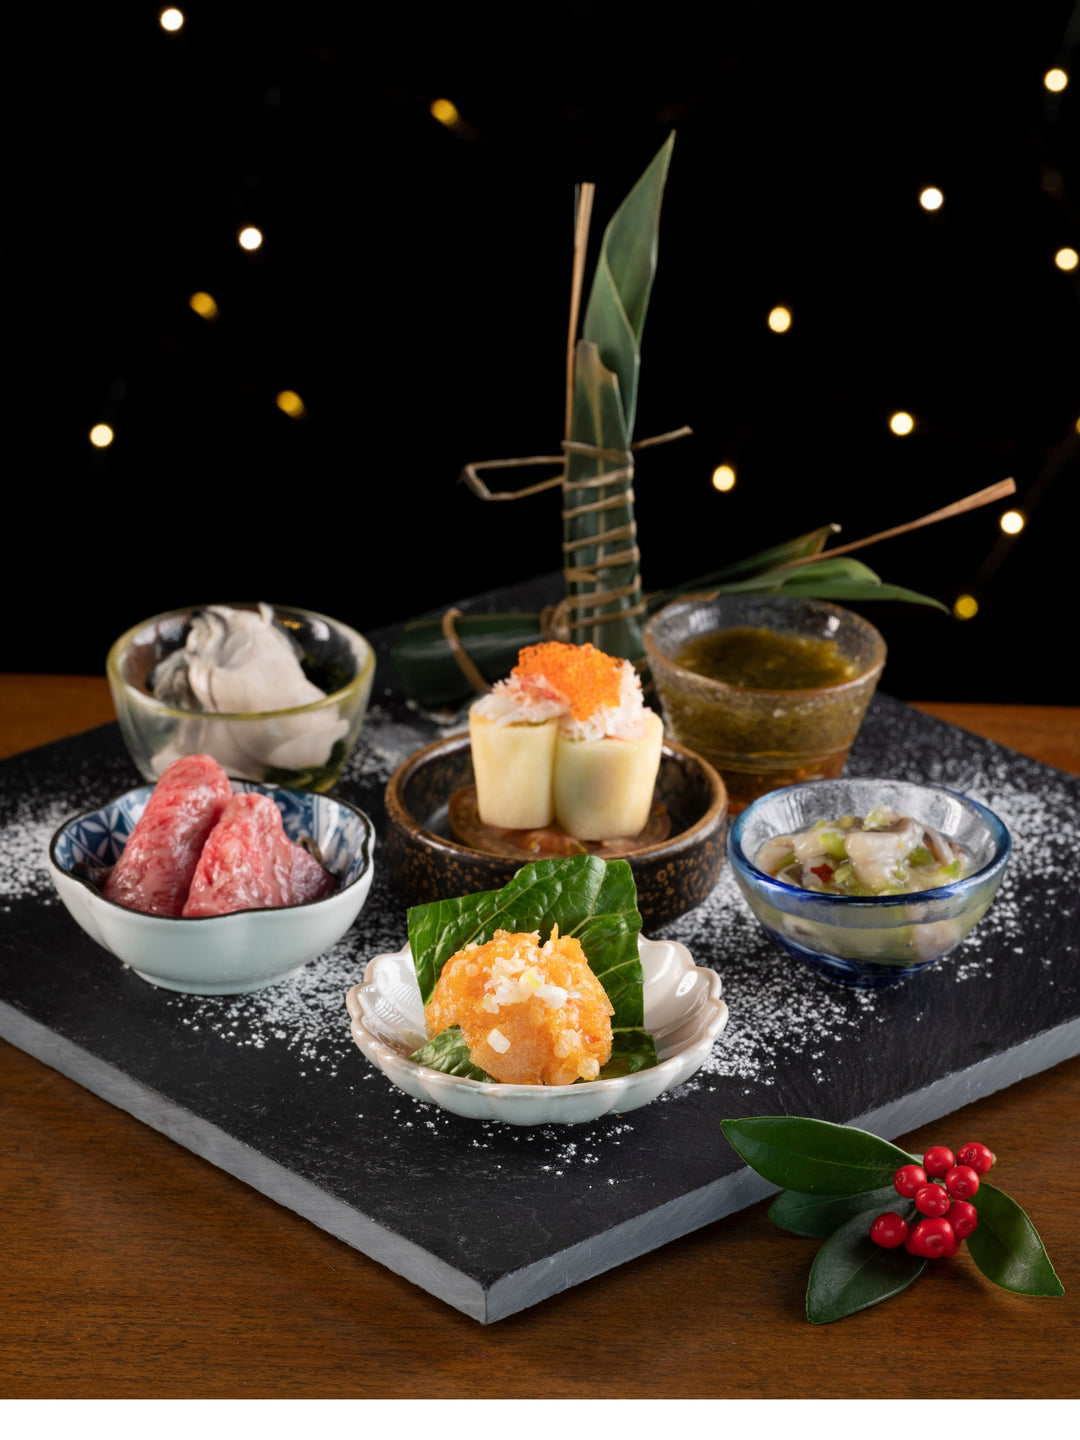 Kyoto Joe New Year's Eve Dinner (December 31)